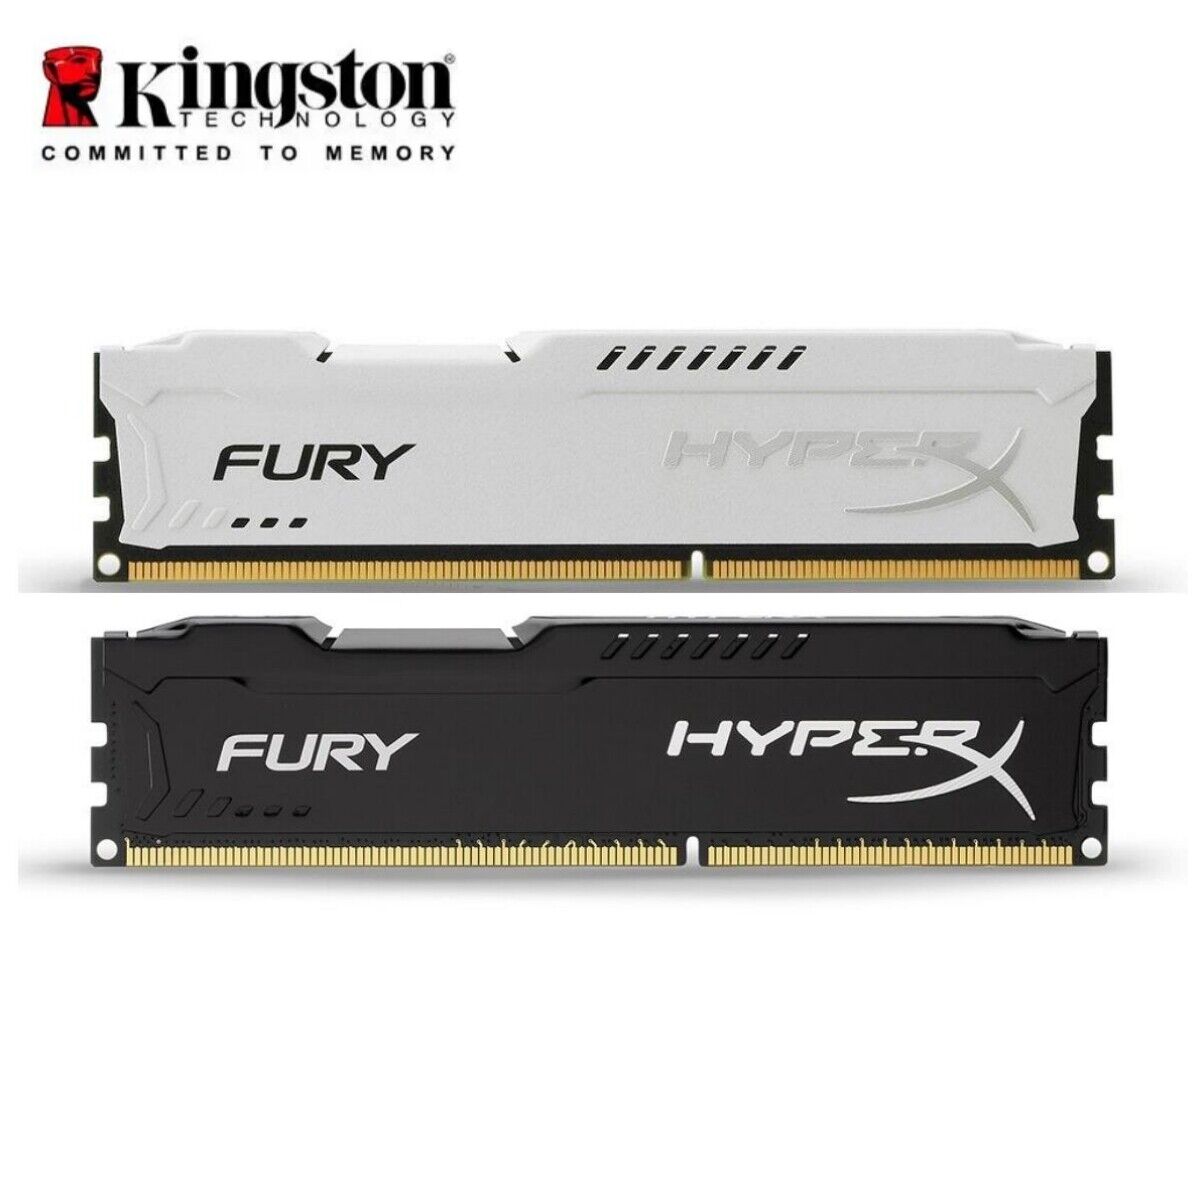 Kingston HyperX FURY DDR3 8GB 16GB 32G 1600 1866 1333 Desktop Memory DIMM